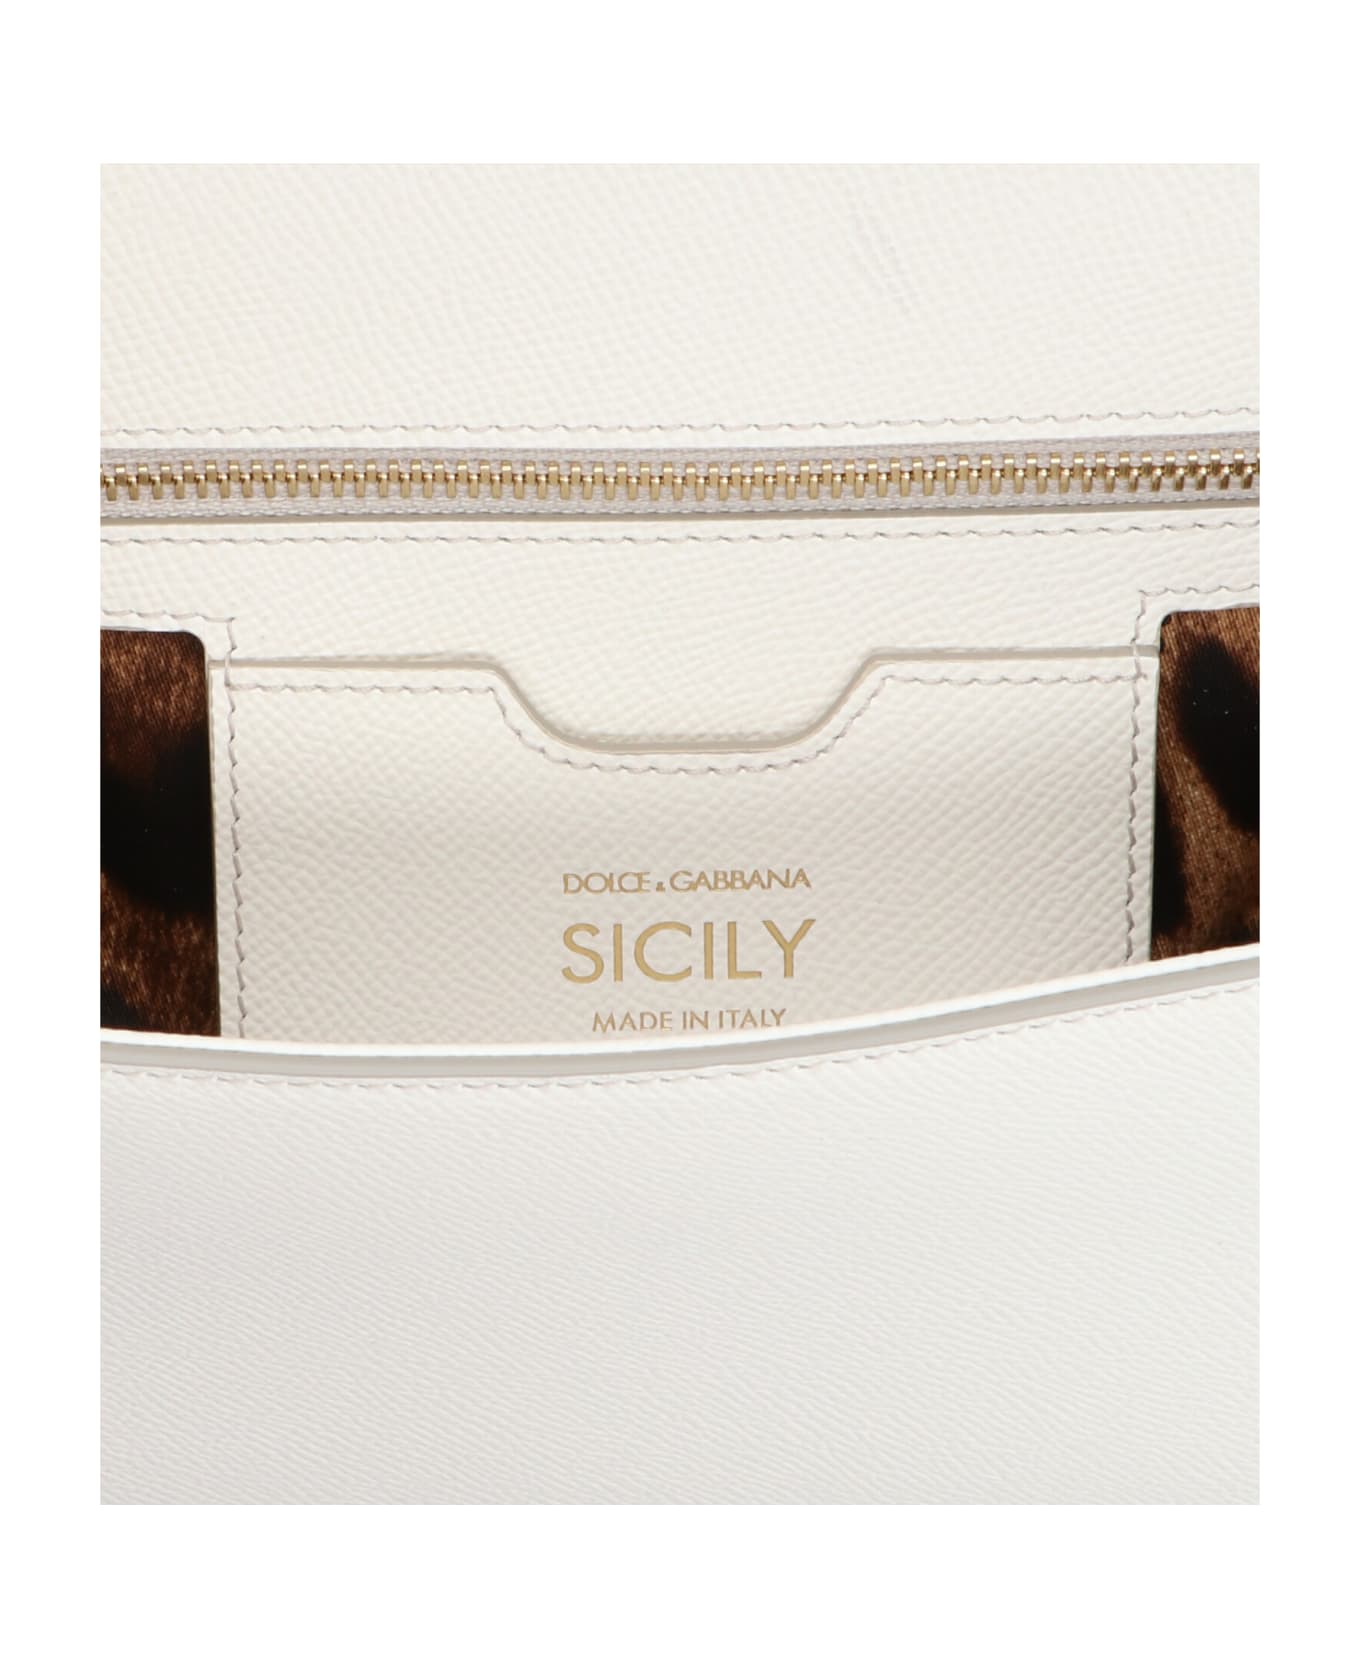 Dolce & Gabbana 'sicily' Handbag - White